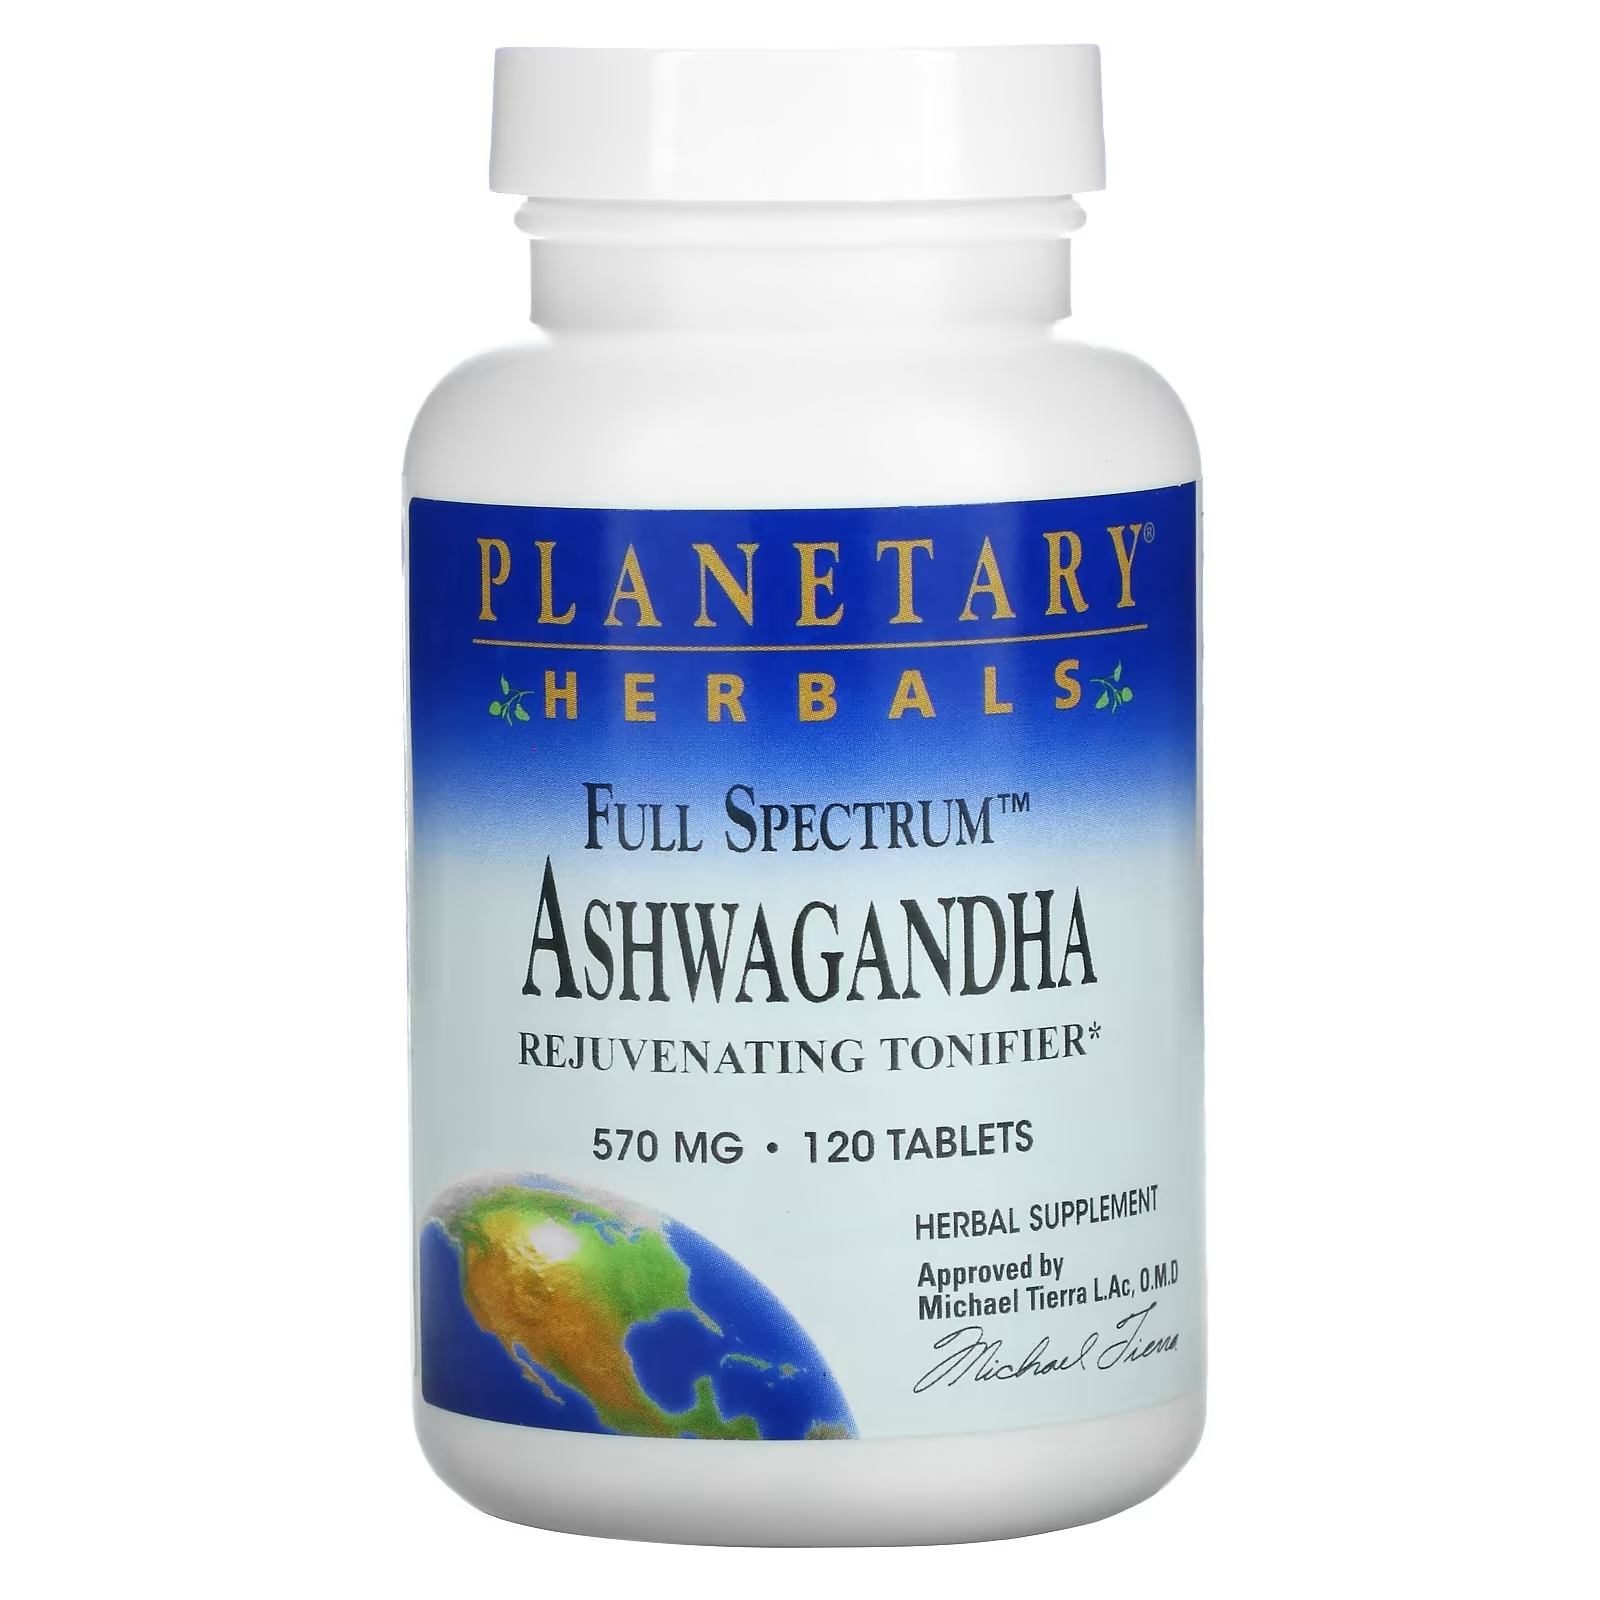 Planetary Herbals Full Spectrum ашваганда 570 мг, 120 таблеток planetary herbals full spectrum ашваганда 570 мг 120 таблеток